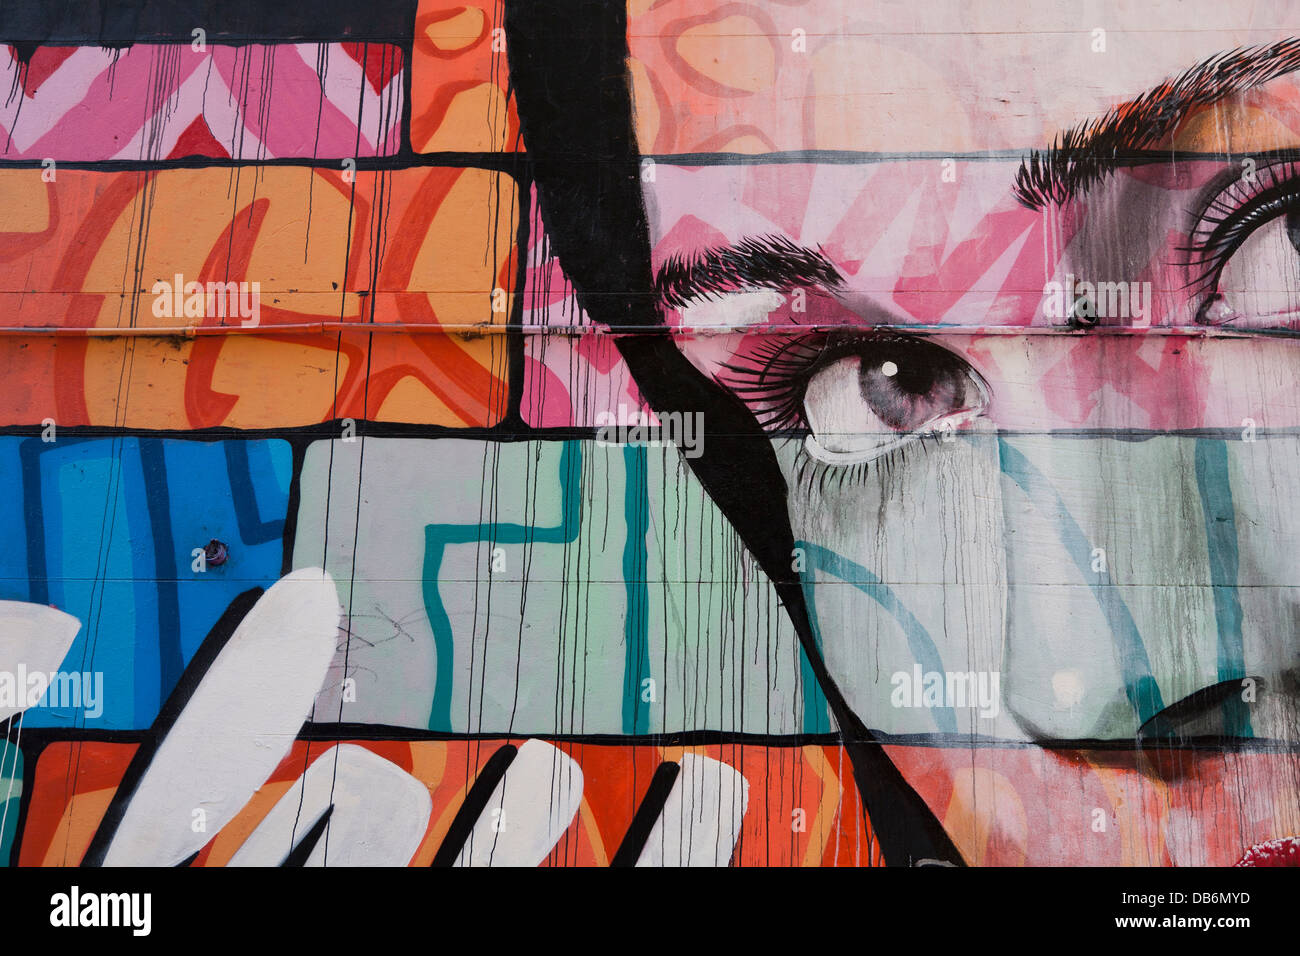 Dettaglio dei graffiti. Hosier Lane. Melbourne, Australia Foto Stock